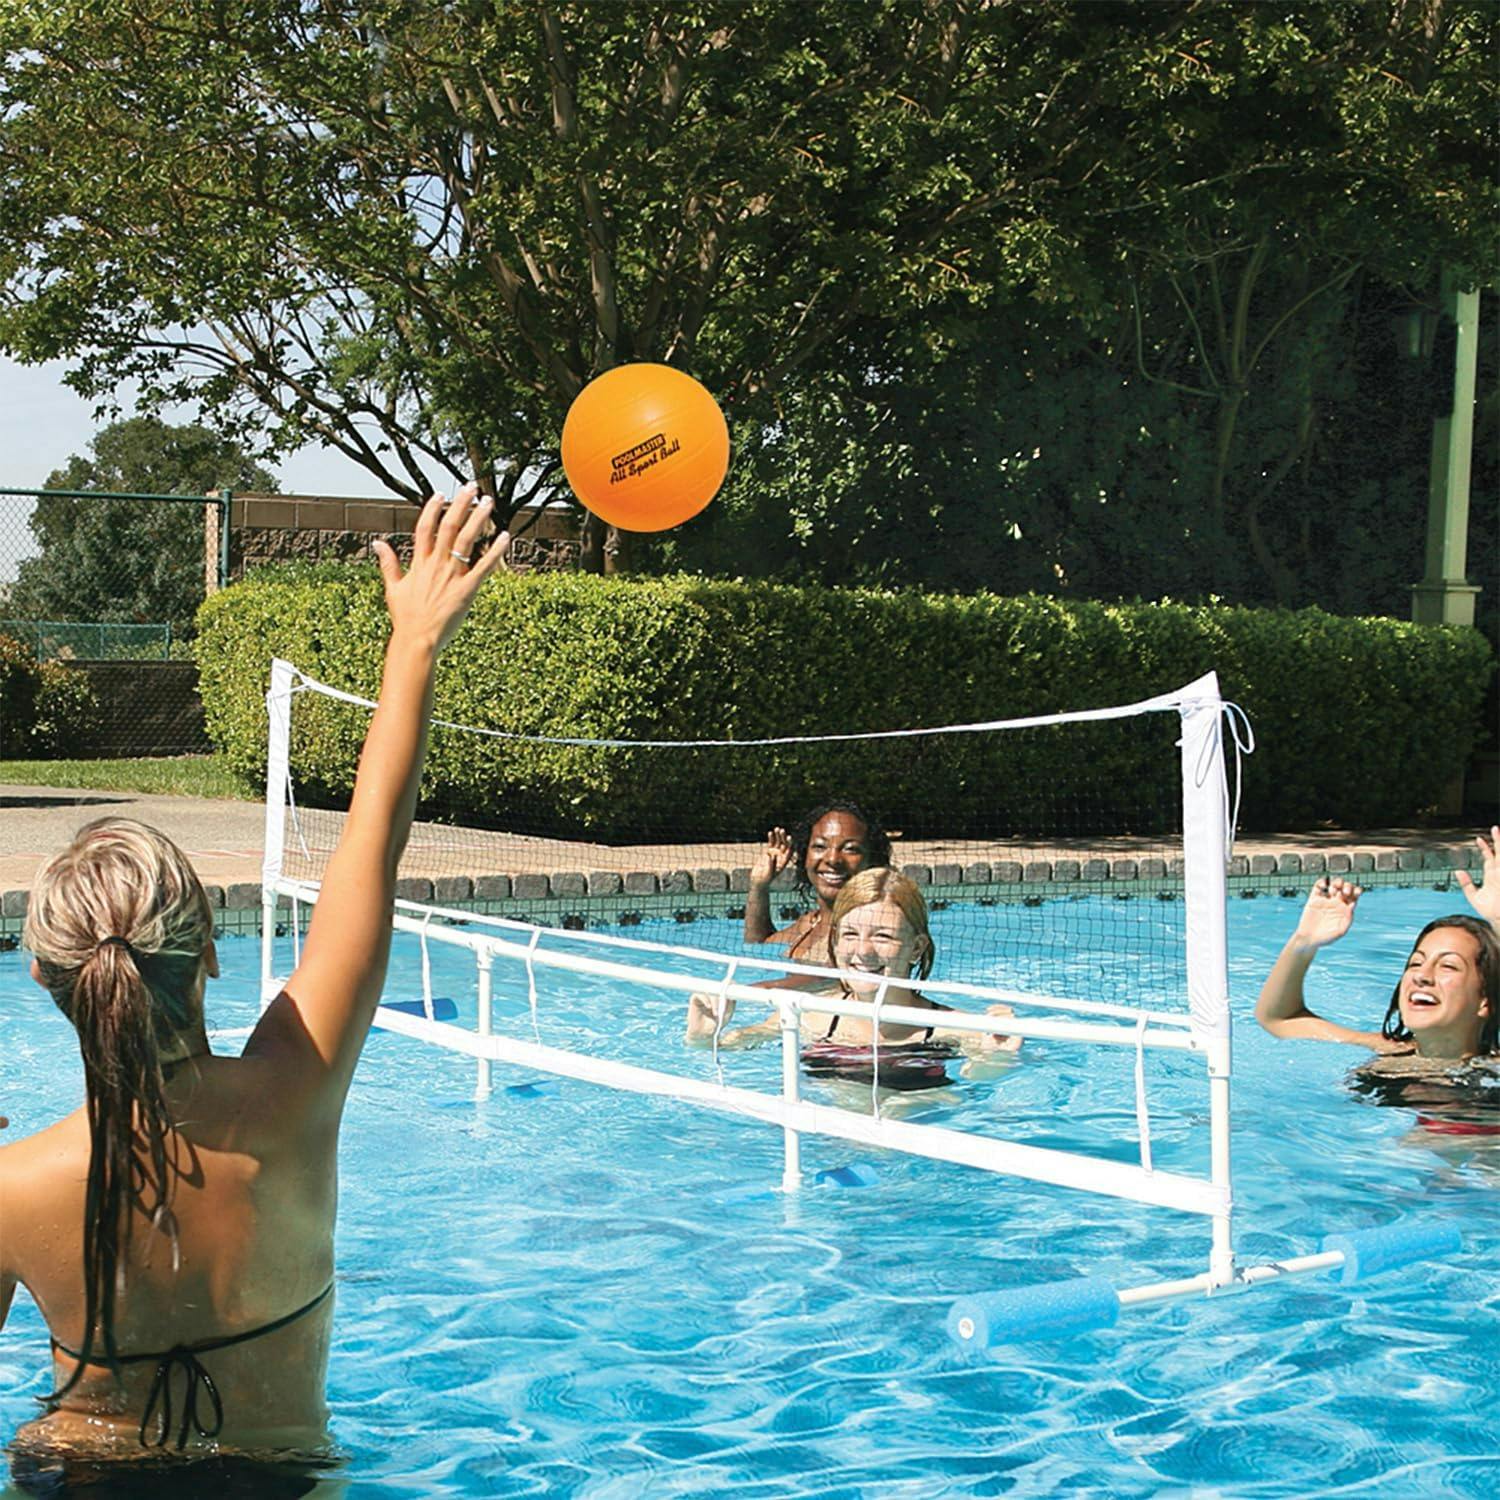 Deluxe 90" Multifunctional Water Volleyball/Badminton Pool Set